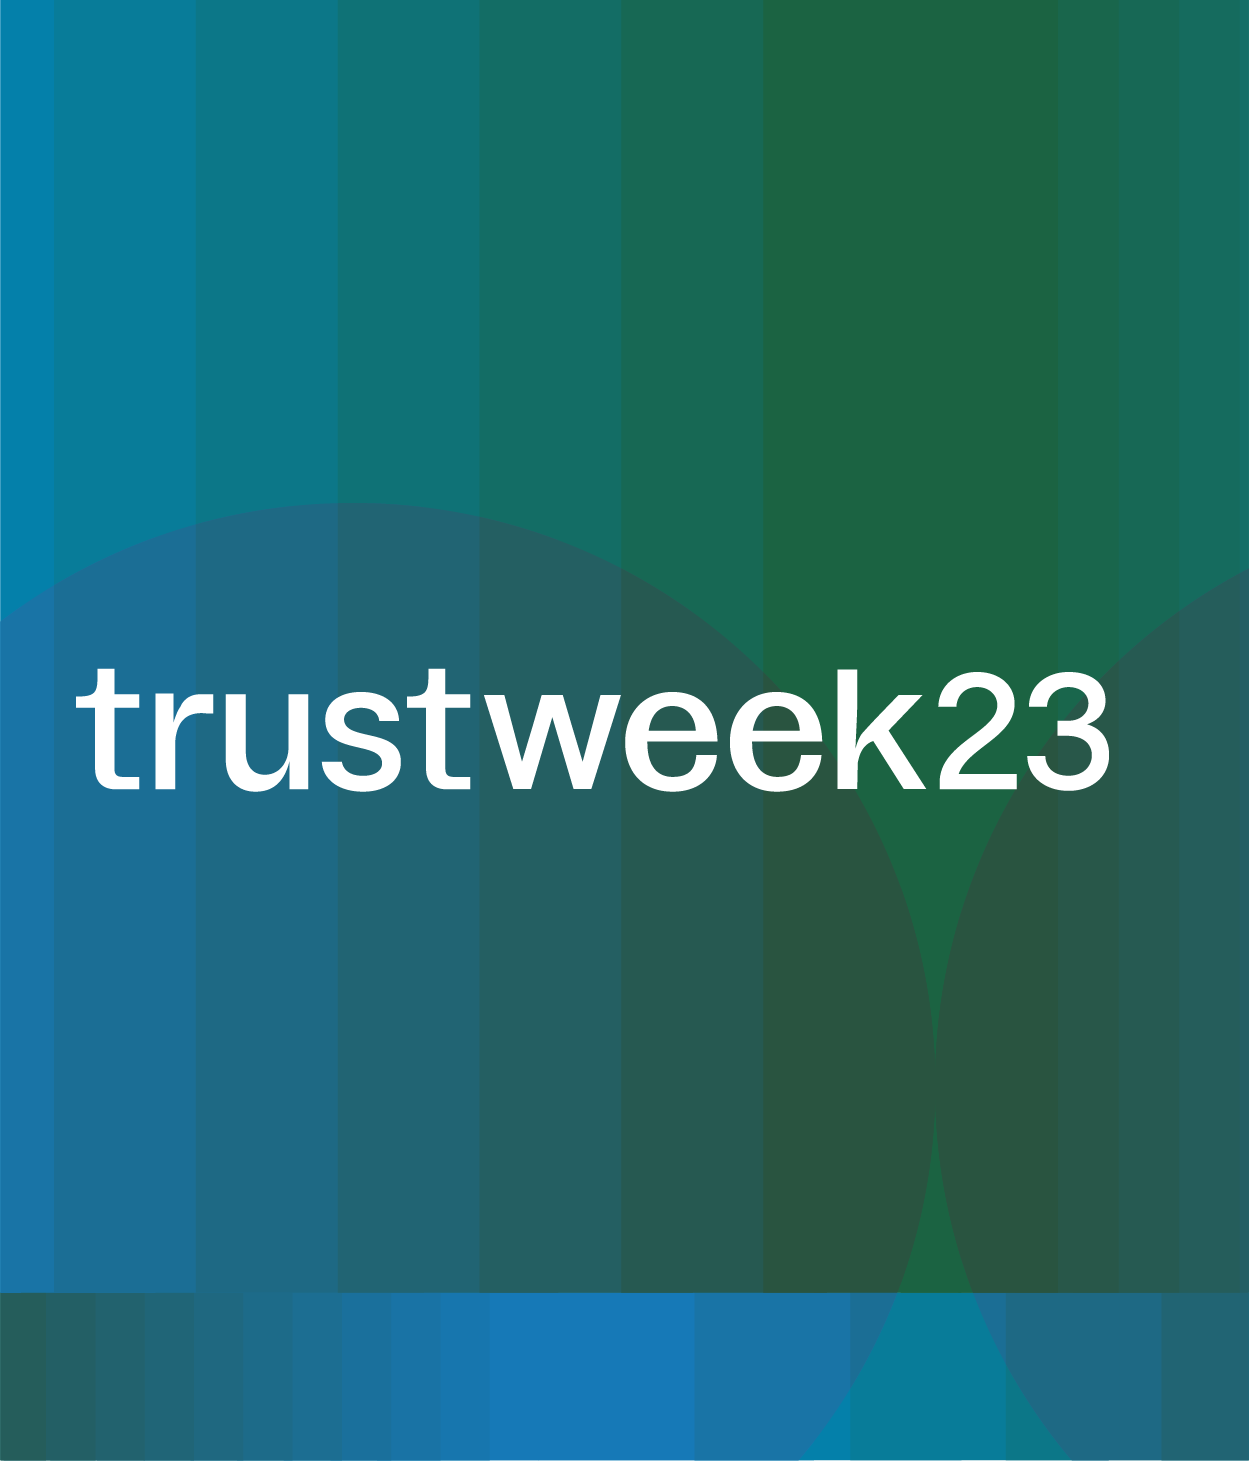 The TrustWeek 2023 logo